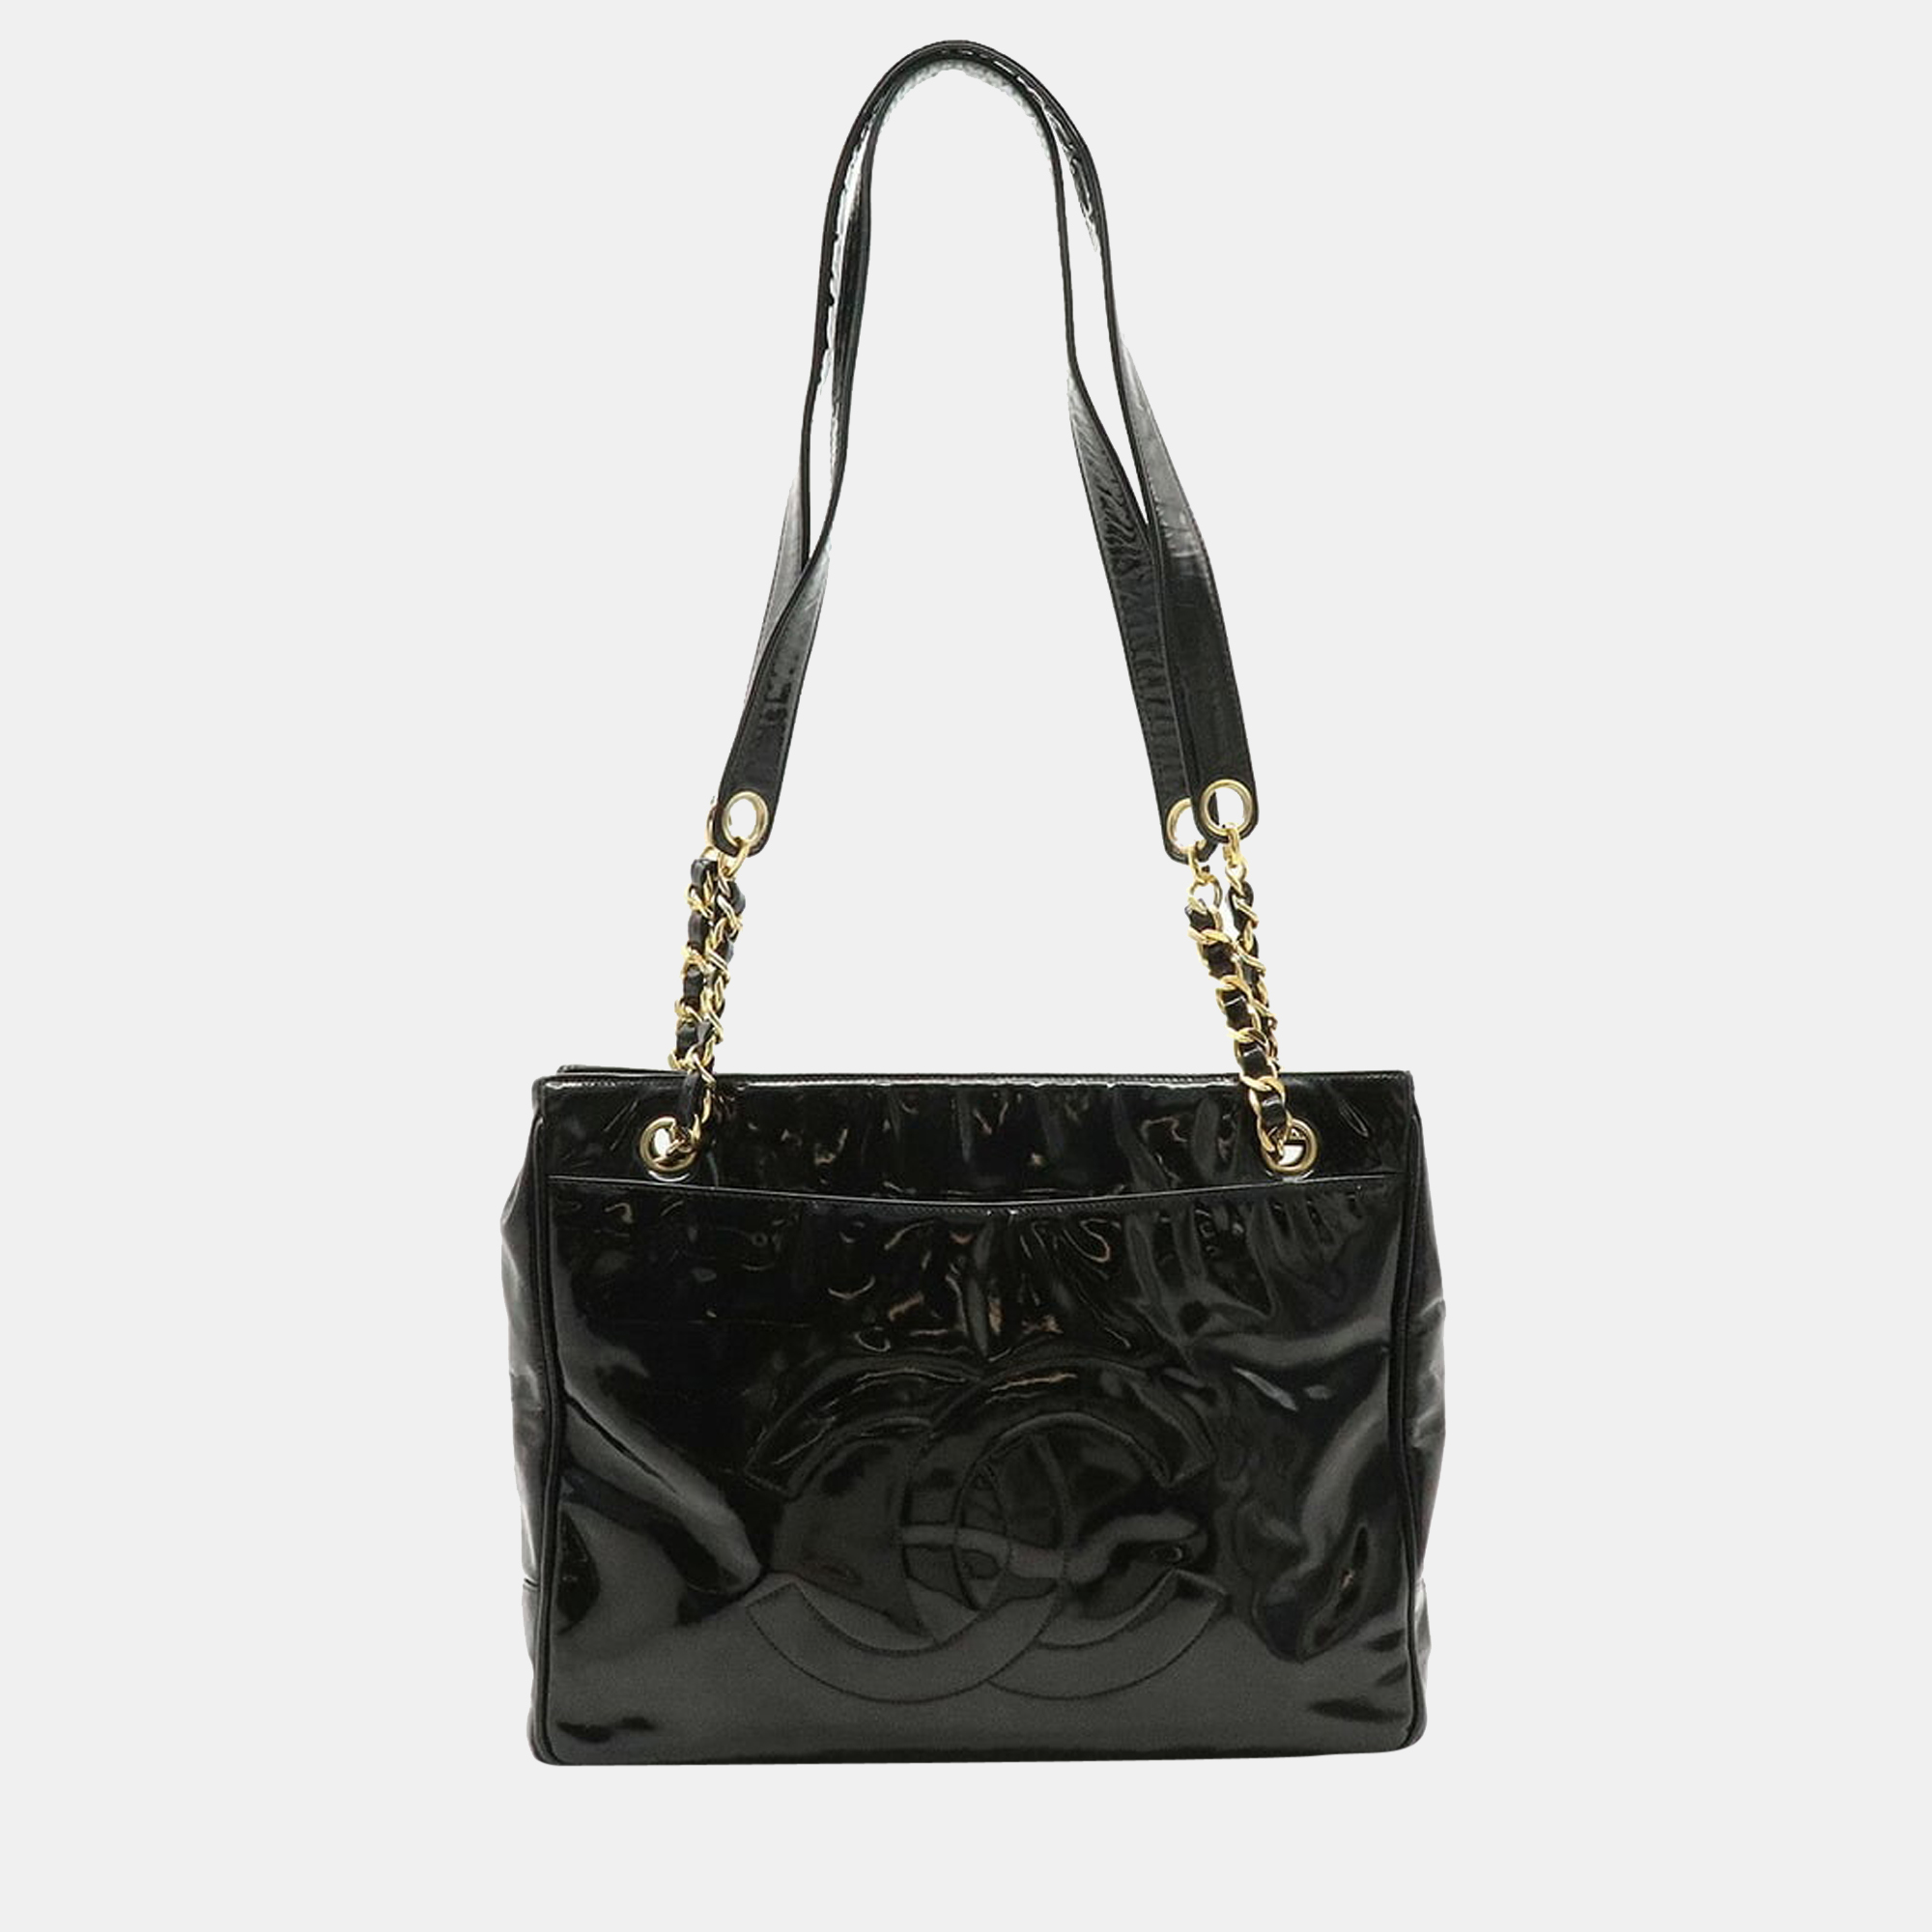 

Chanel Black Patent Leather CC Chain Tote Bag